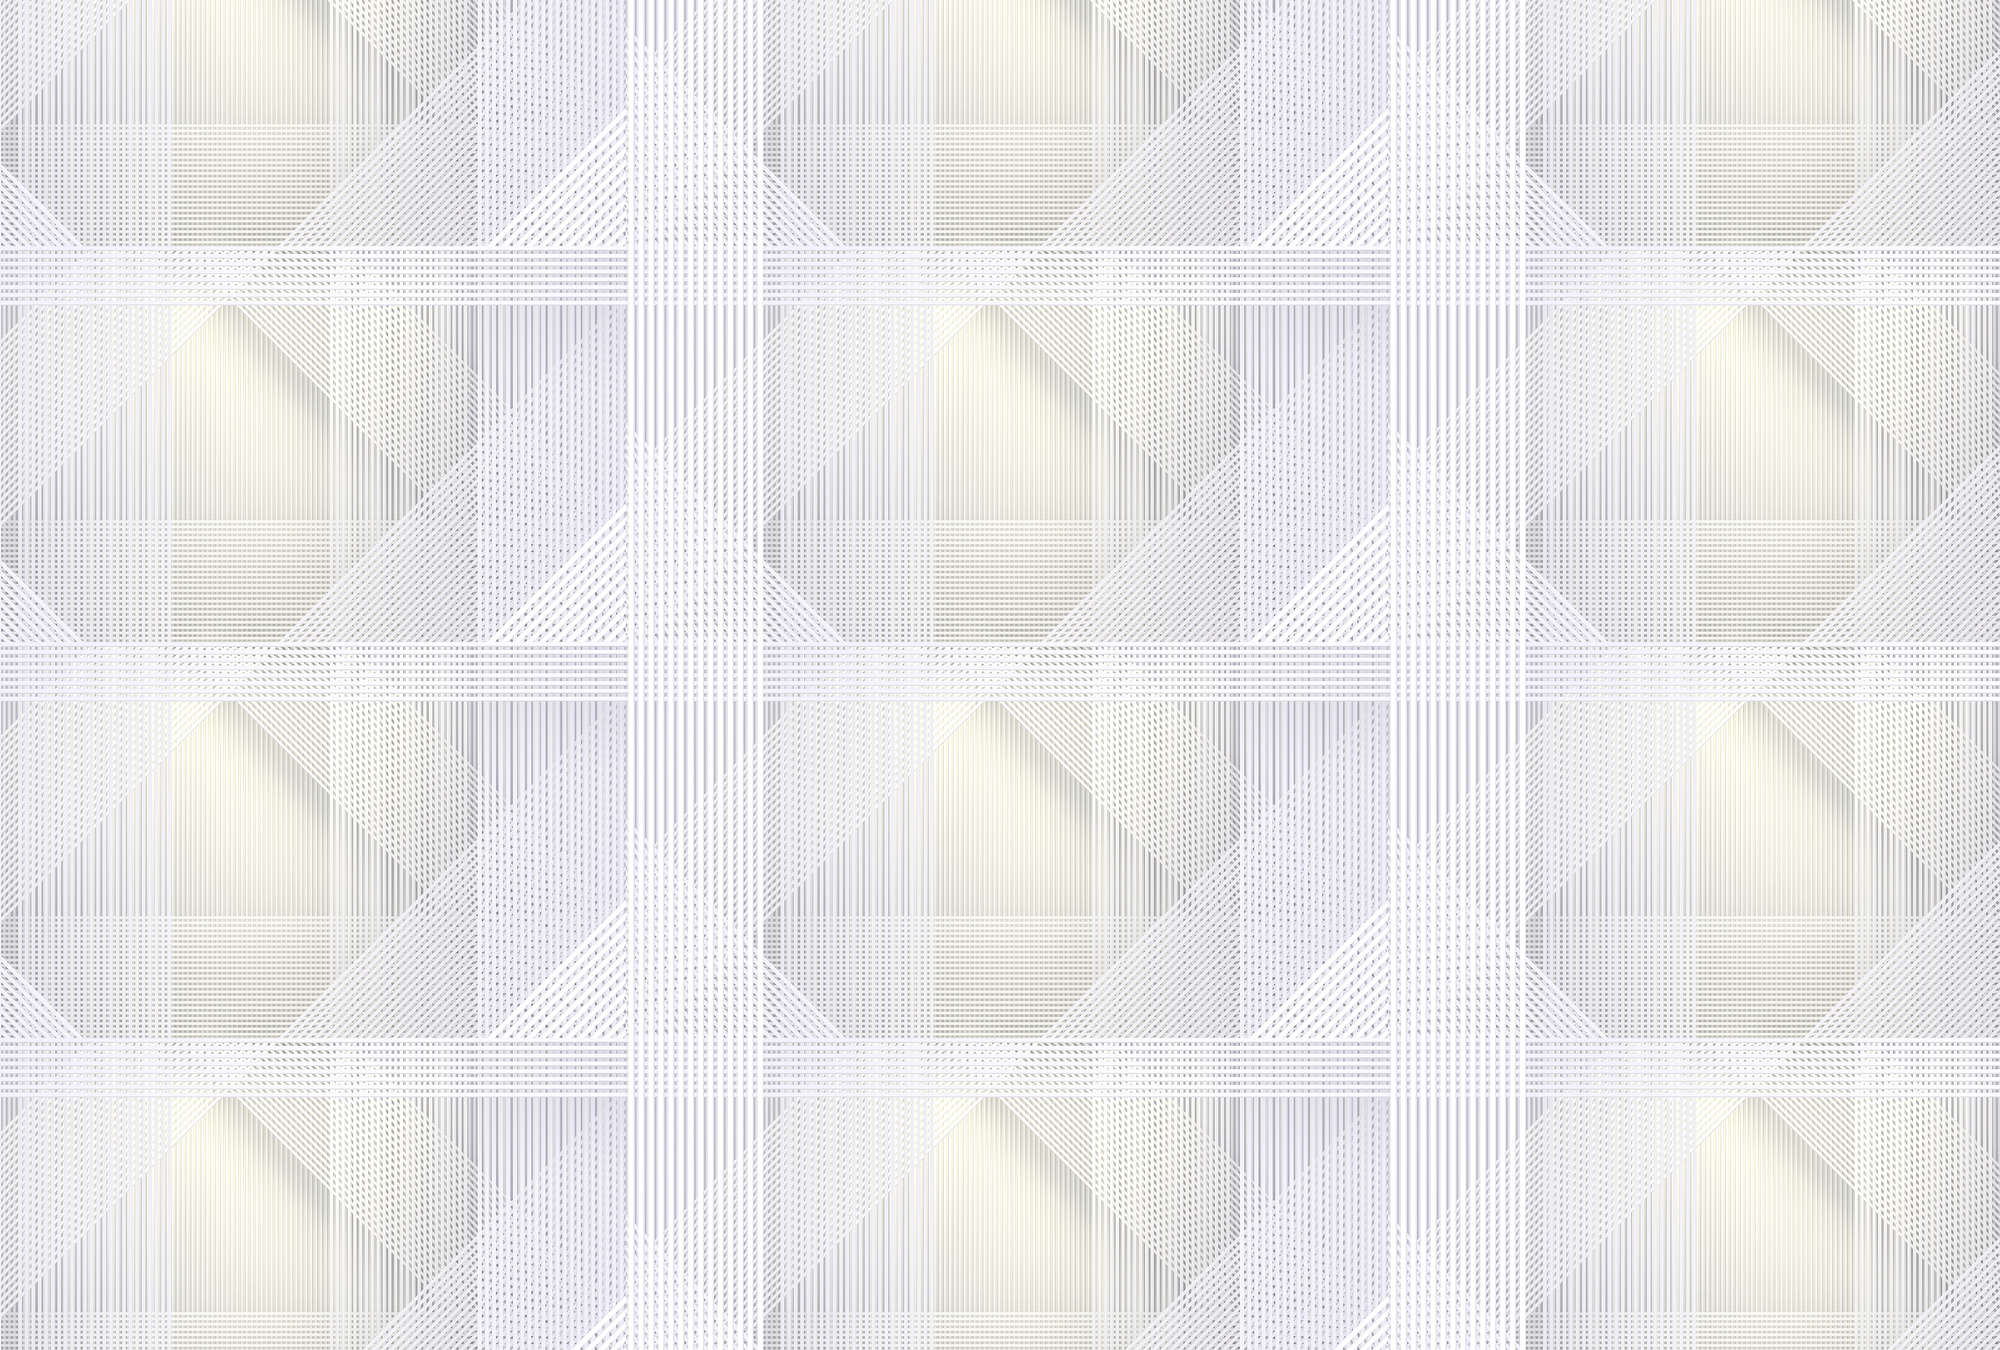             Strings 1 - Photo wallpaper geometric stripe pattern - Yellow, Grey | Pearl smooth non-woven
        